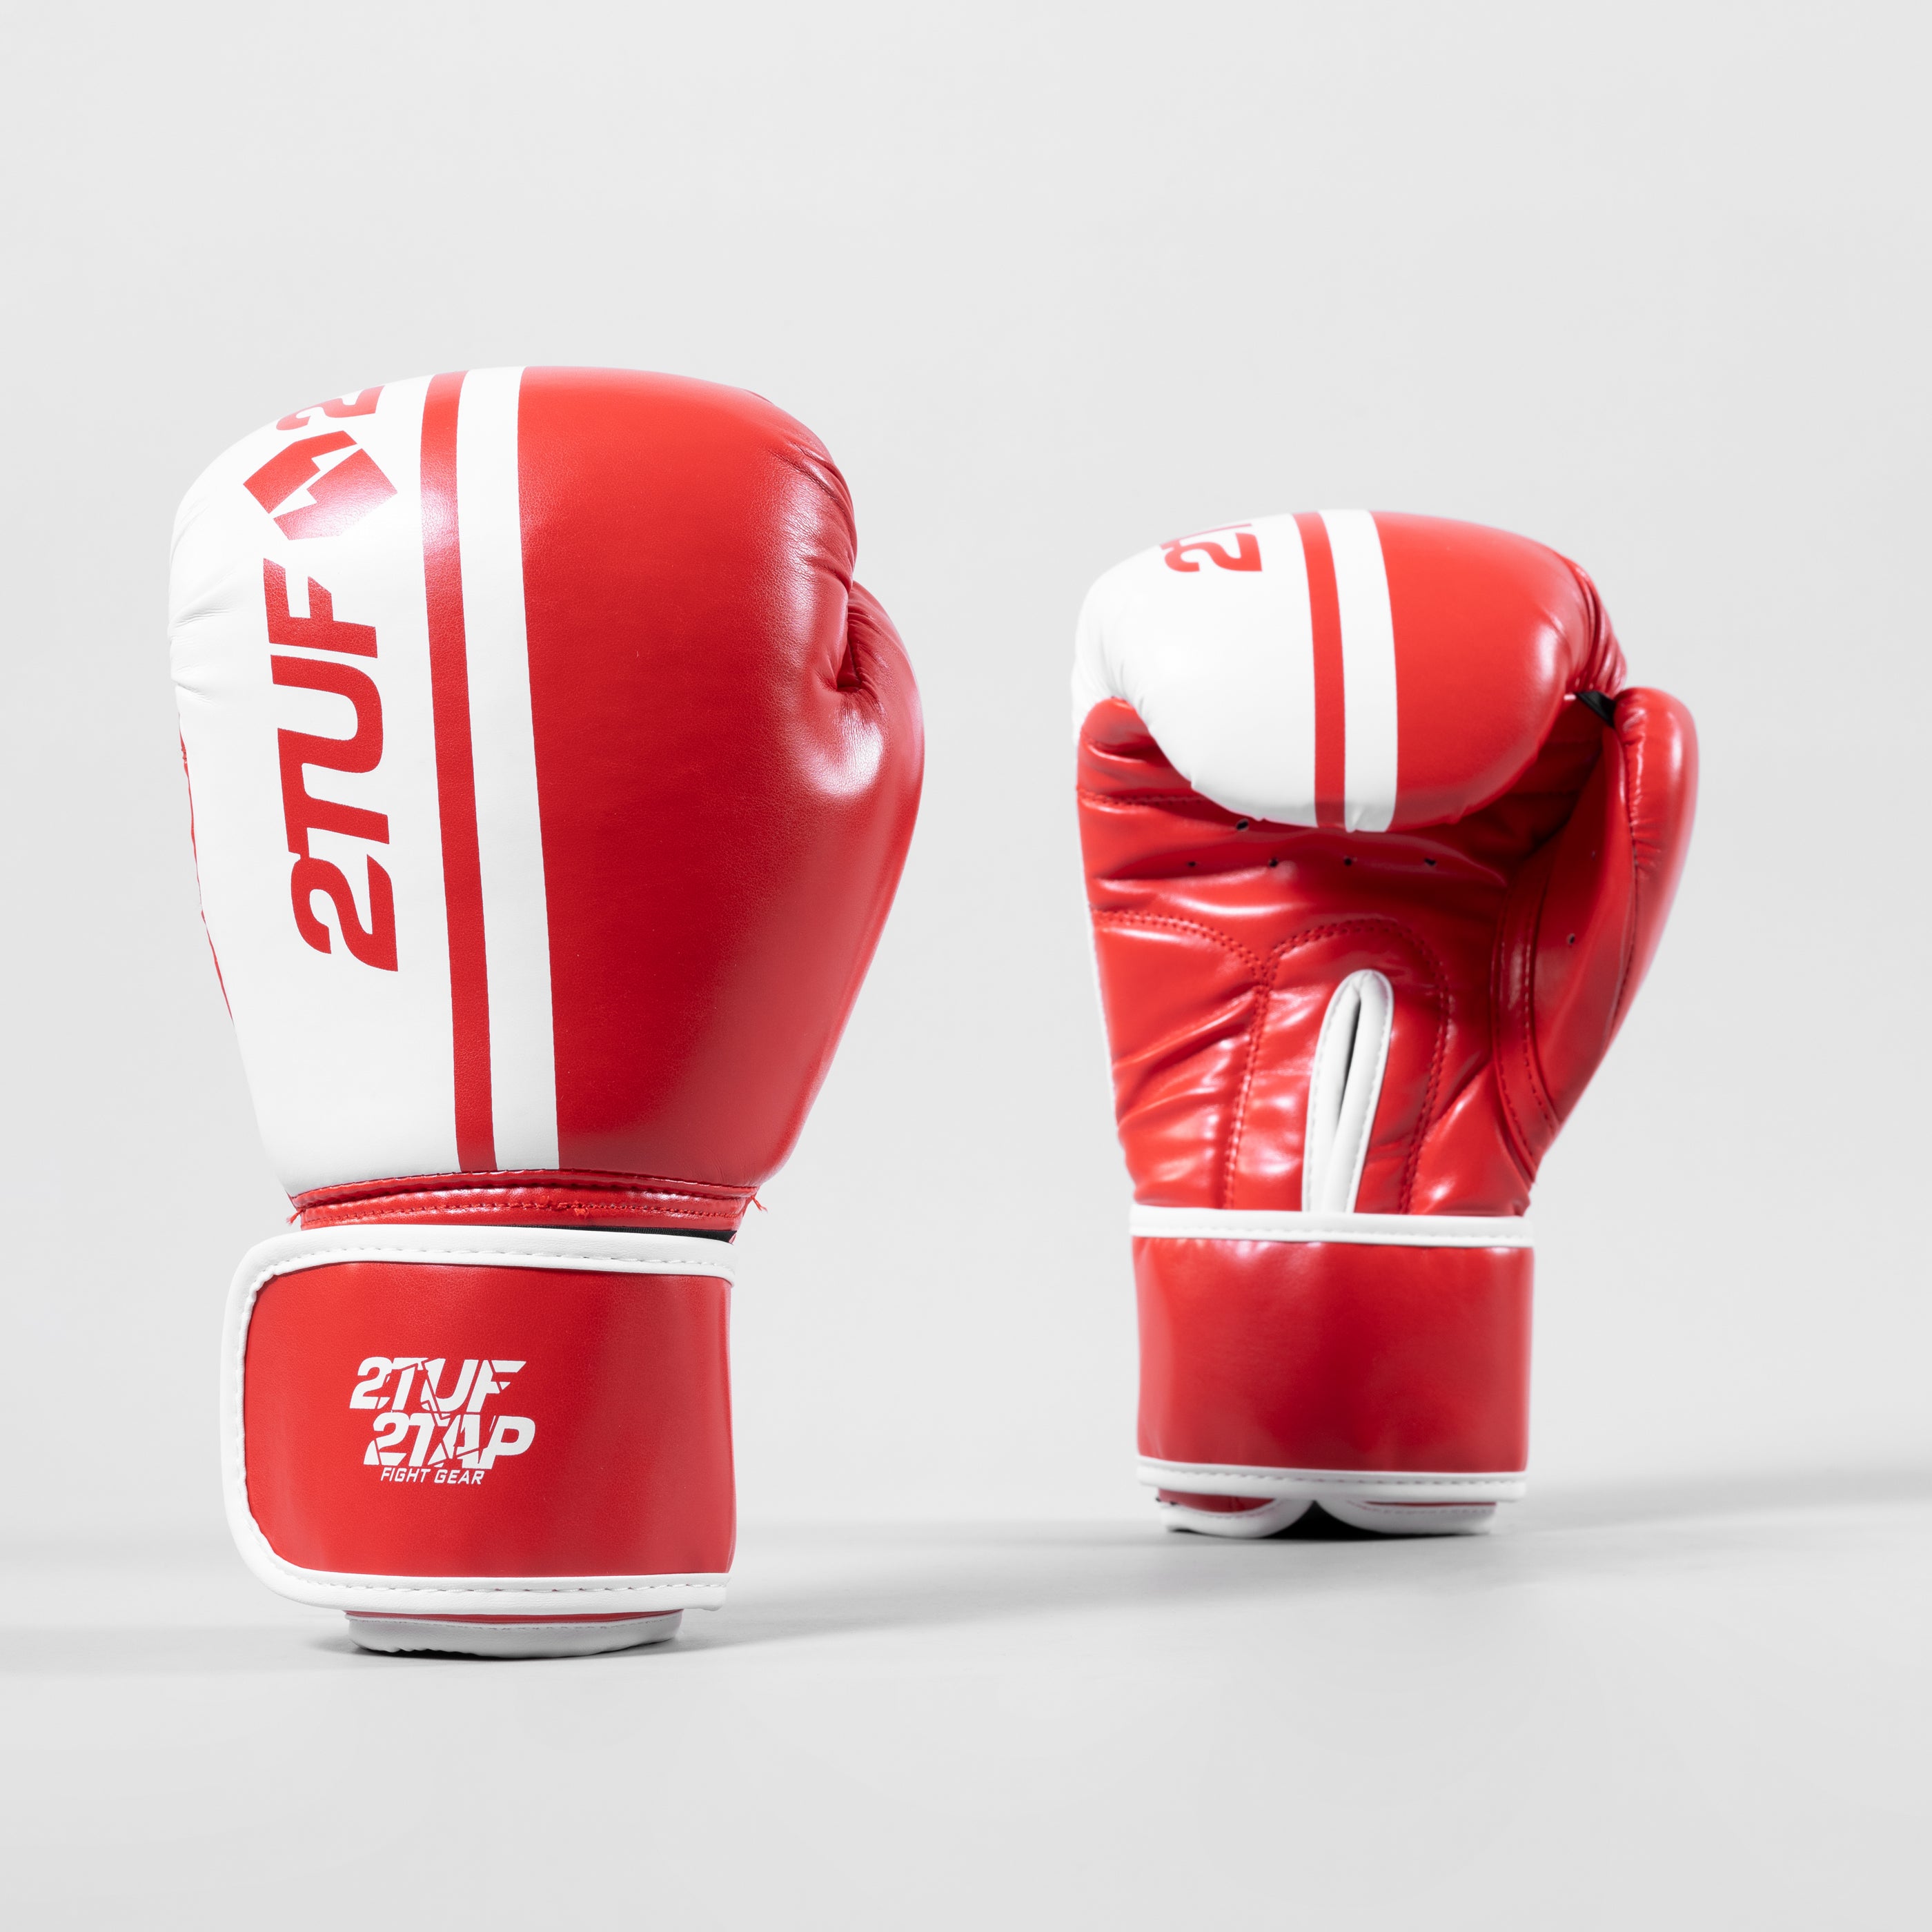 'Hit' Boxing Gloves - Red/White 2TUF2TAP